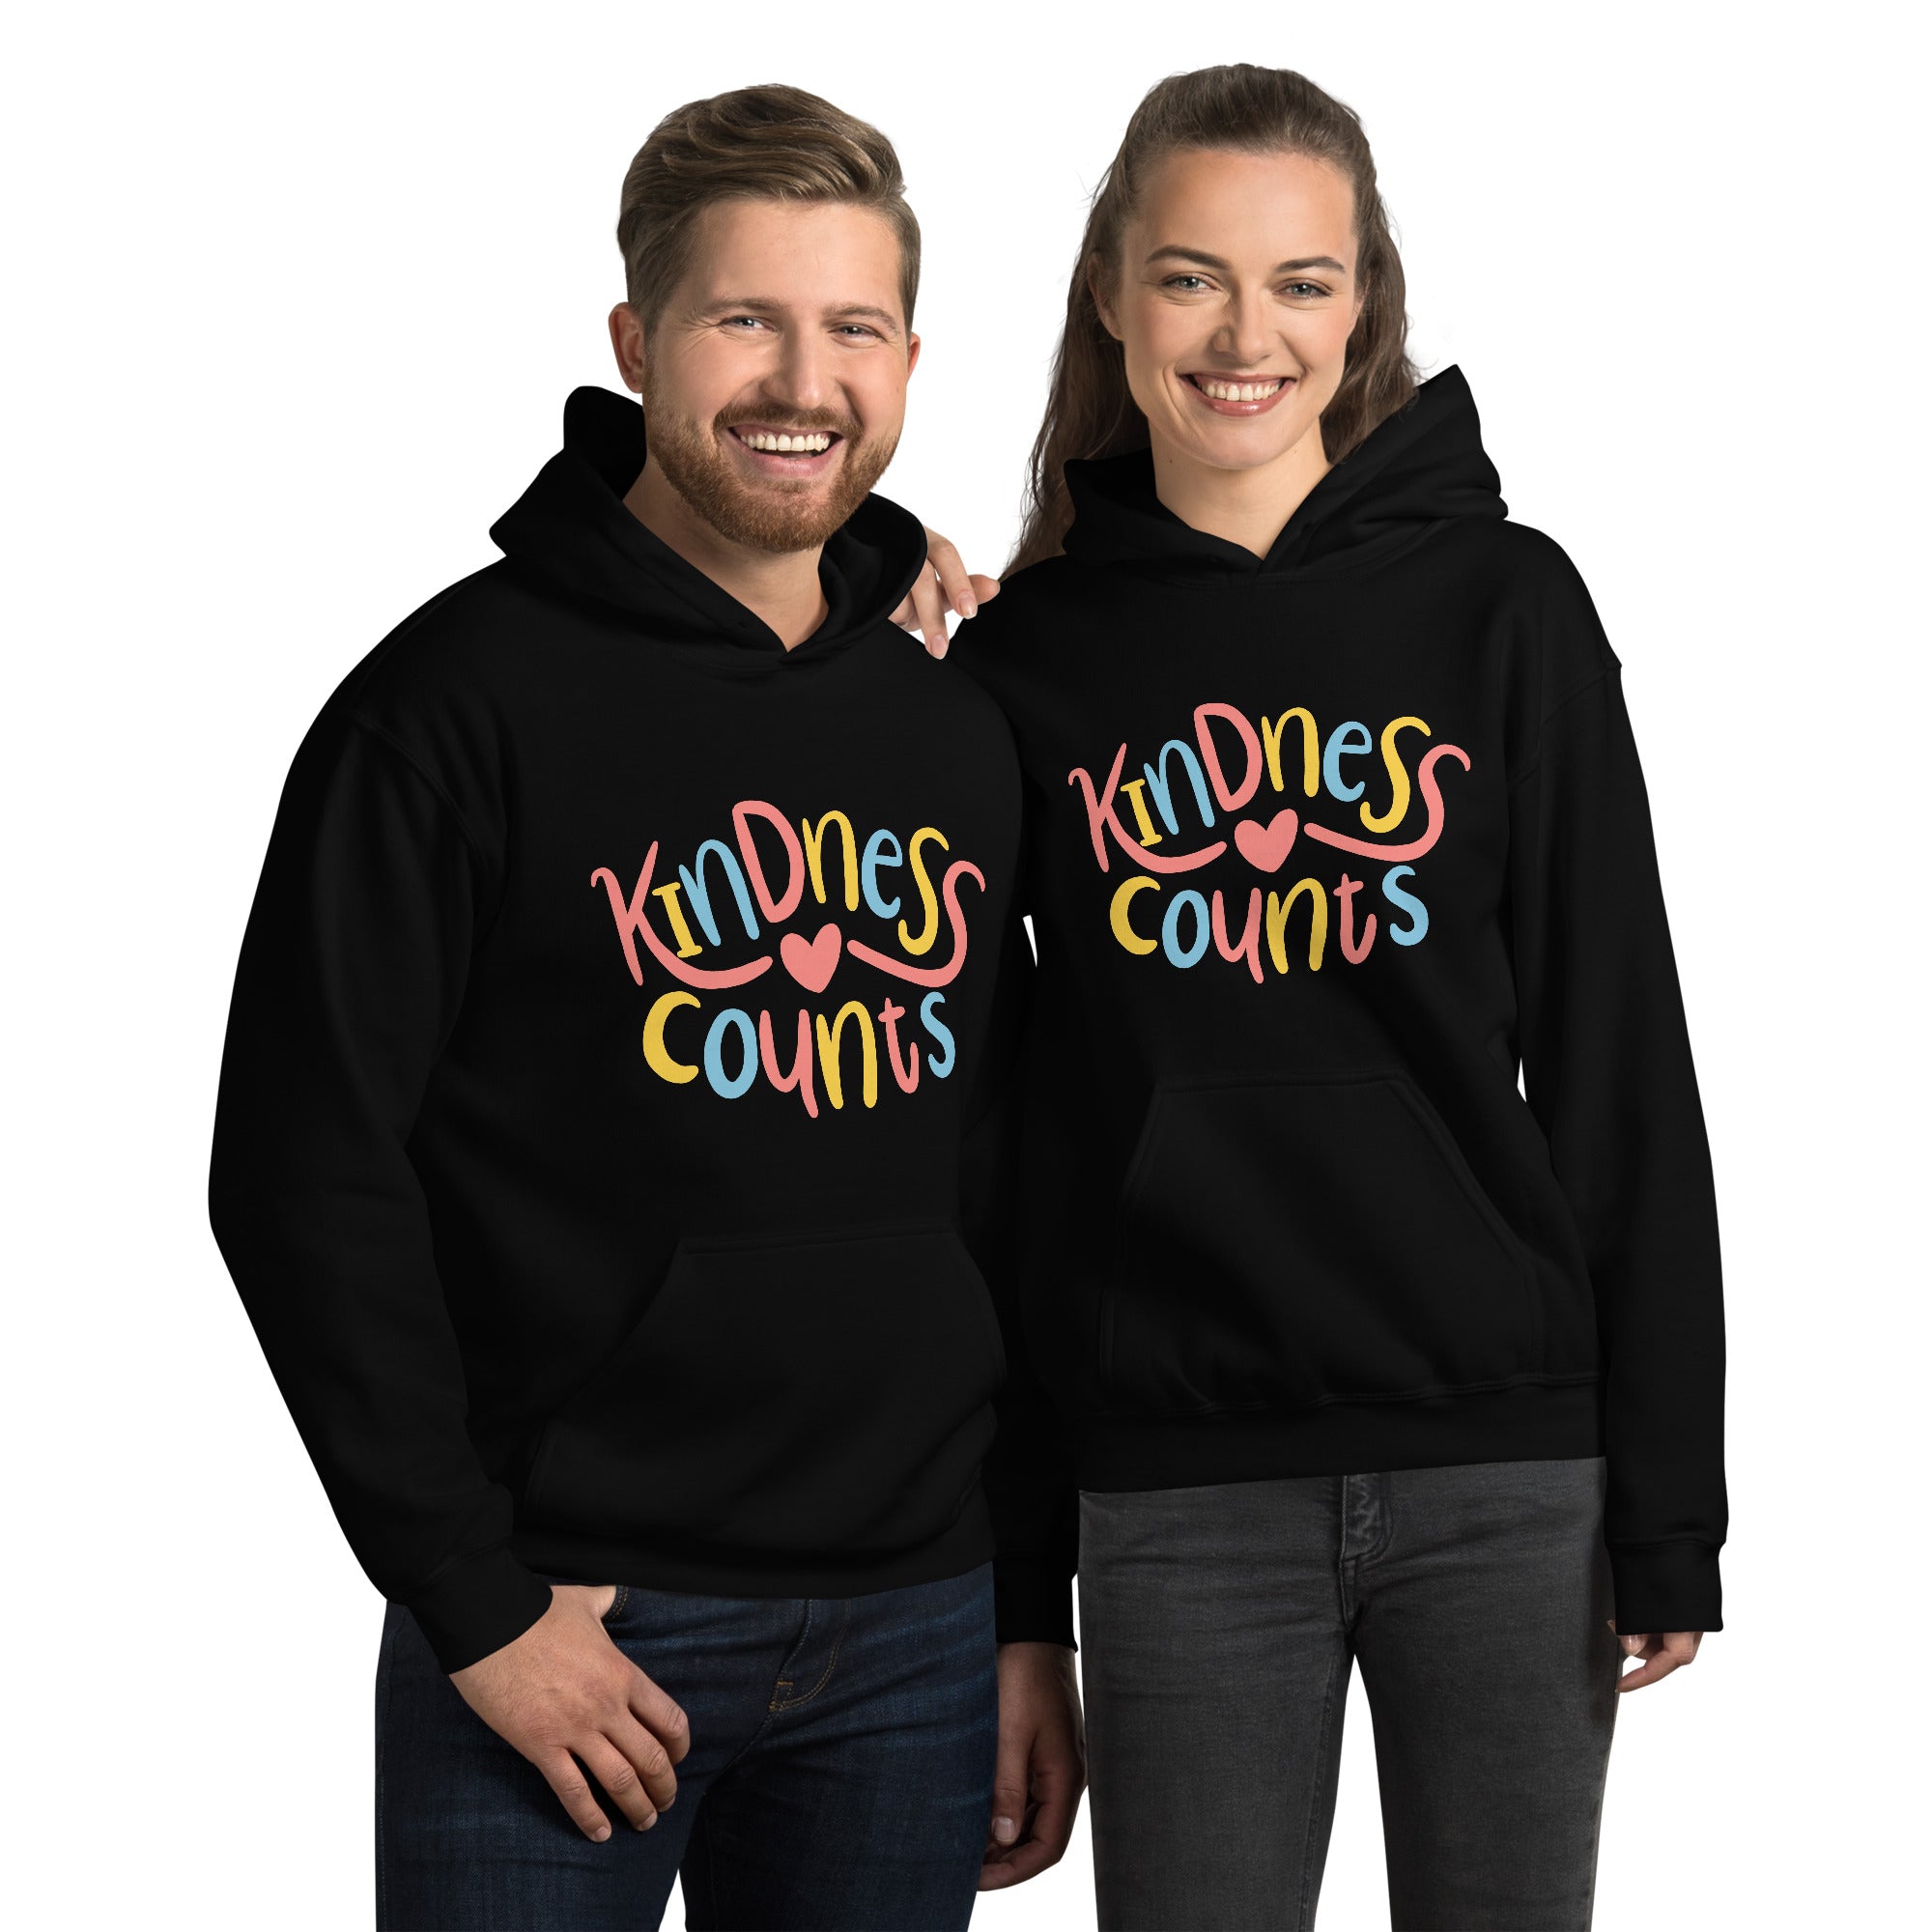 Kindness Counts Inspirational Hooded Sweatshirt for Women